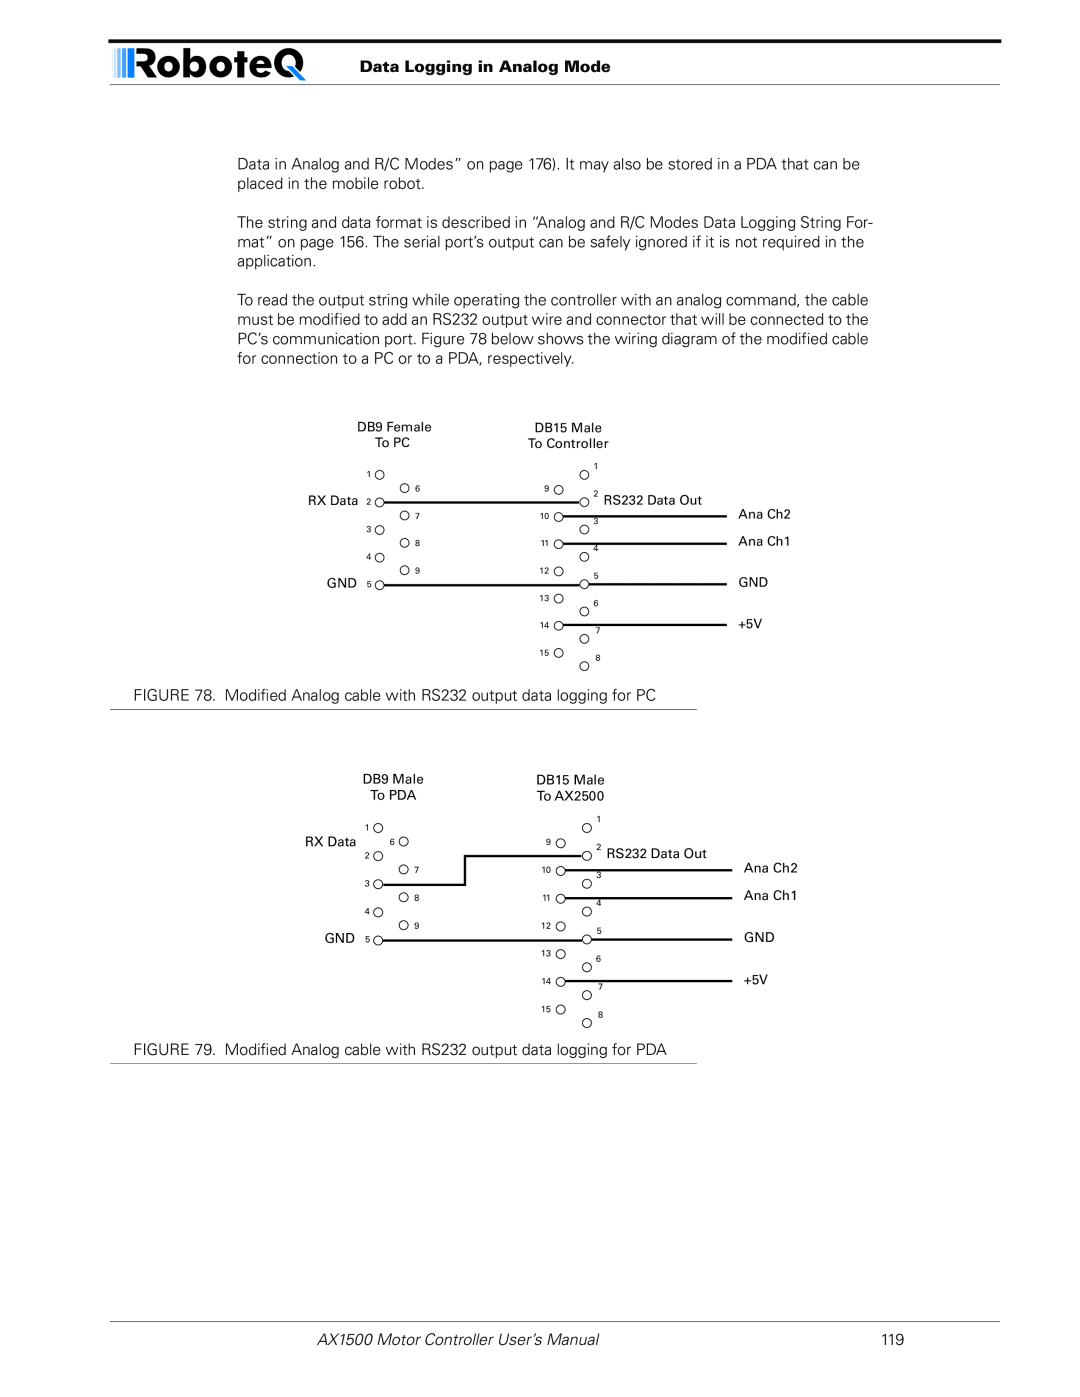 RoboteQ AX2550 user manual Data Logging in Analog Mode, AX1500 Motor Controller User’s Manual 